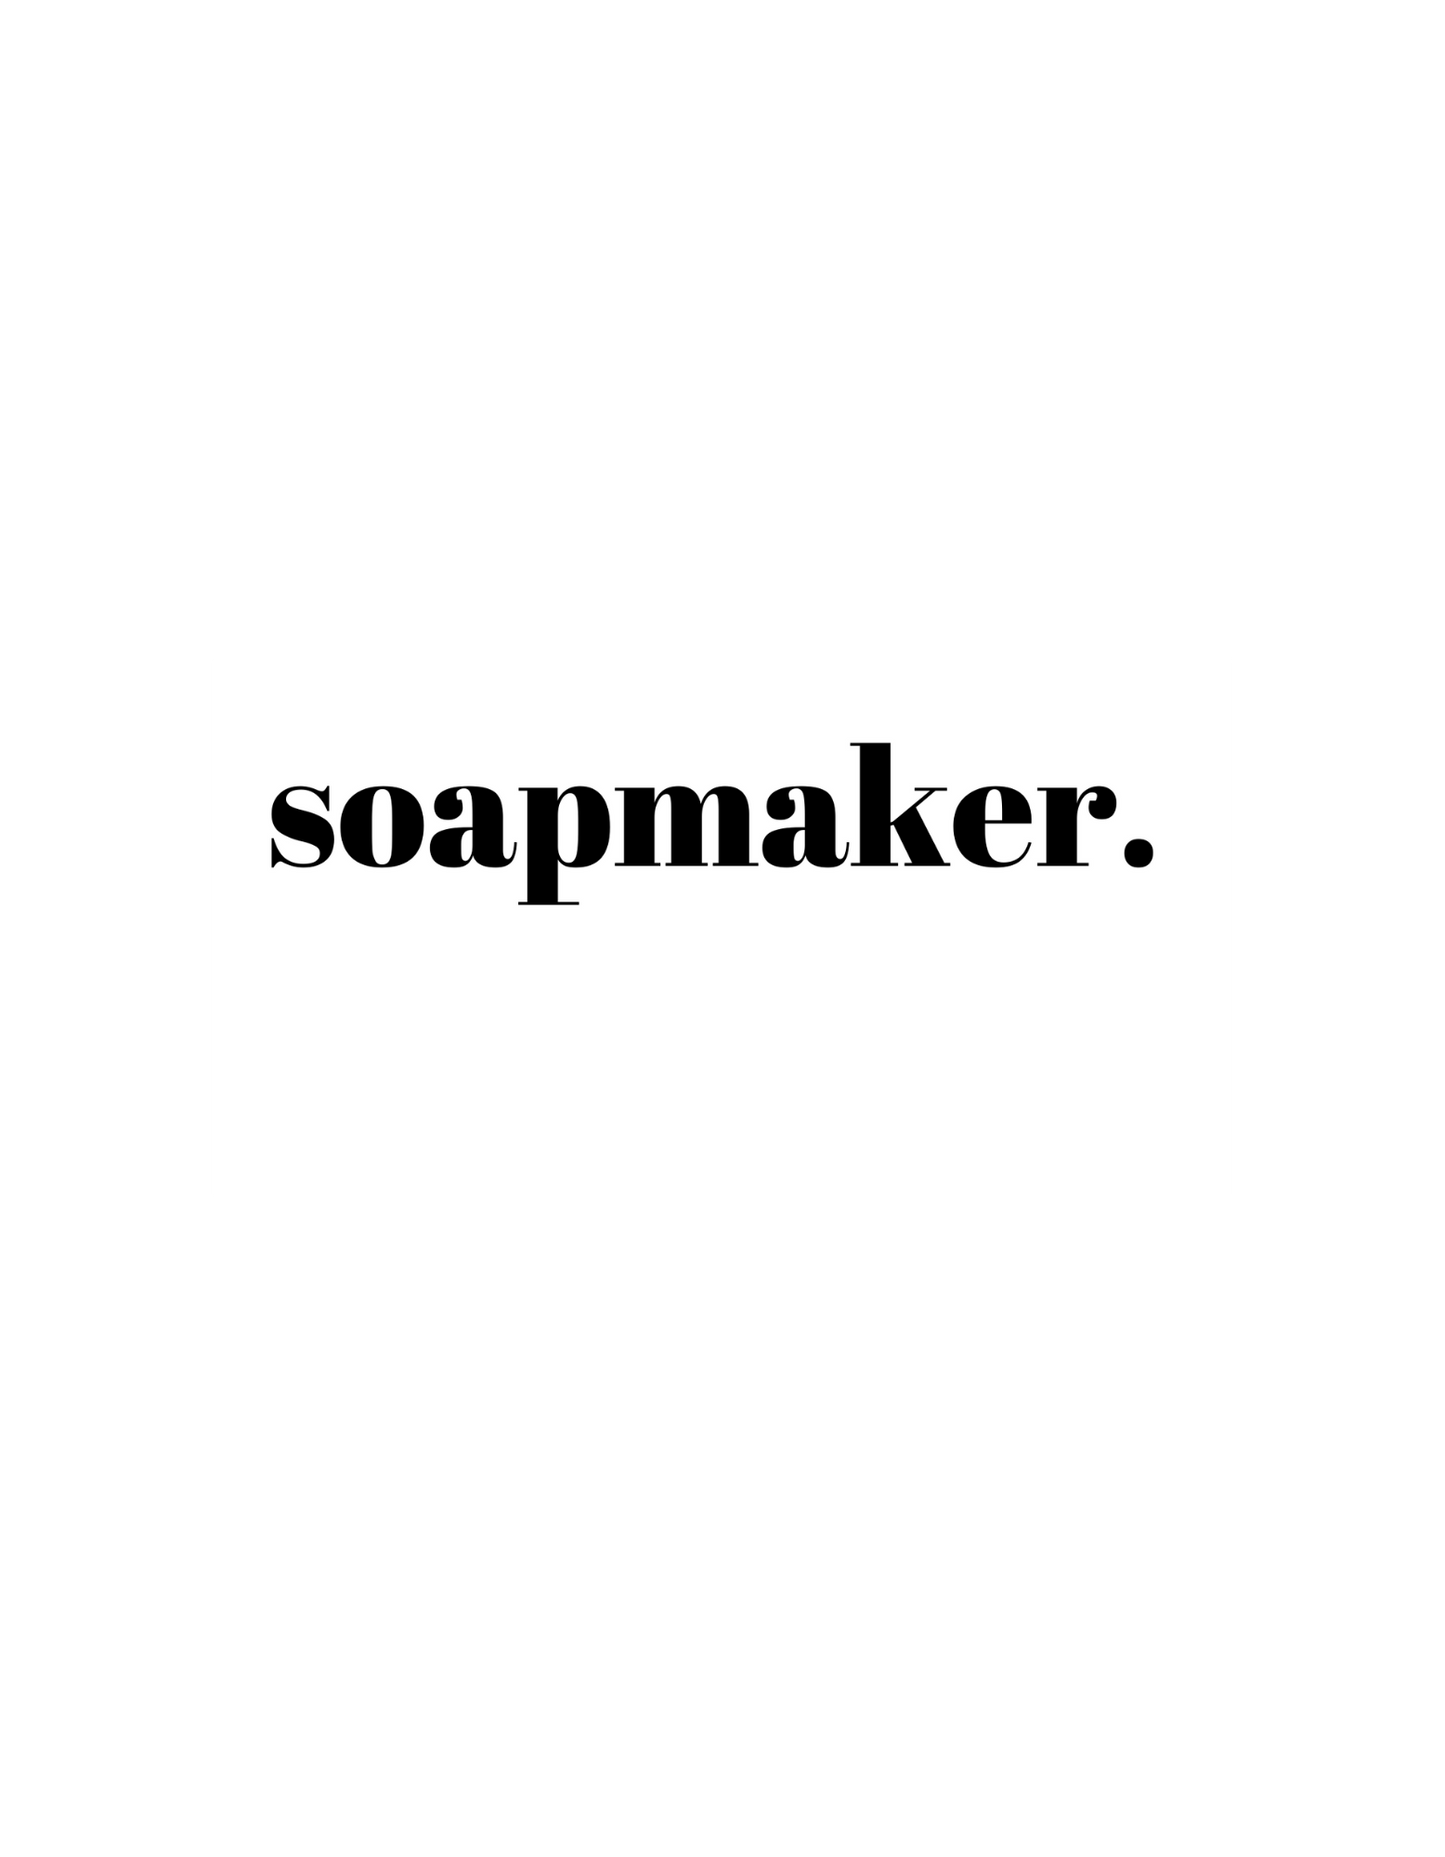 Soapmaker